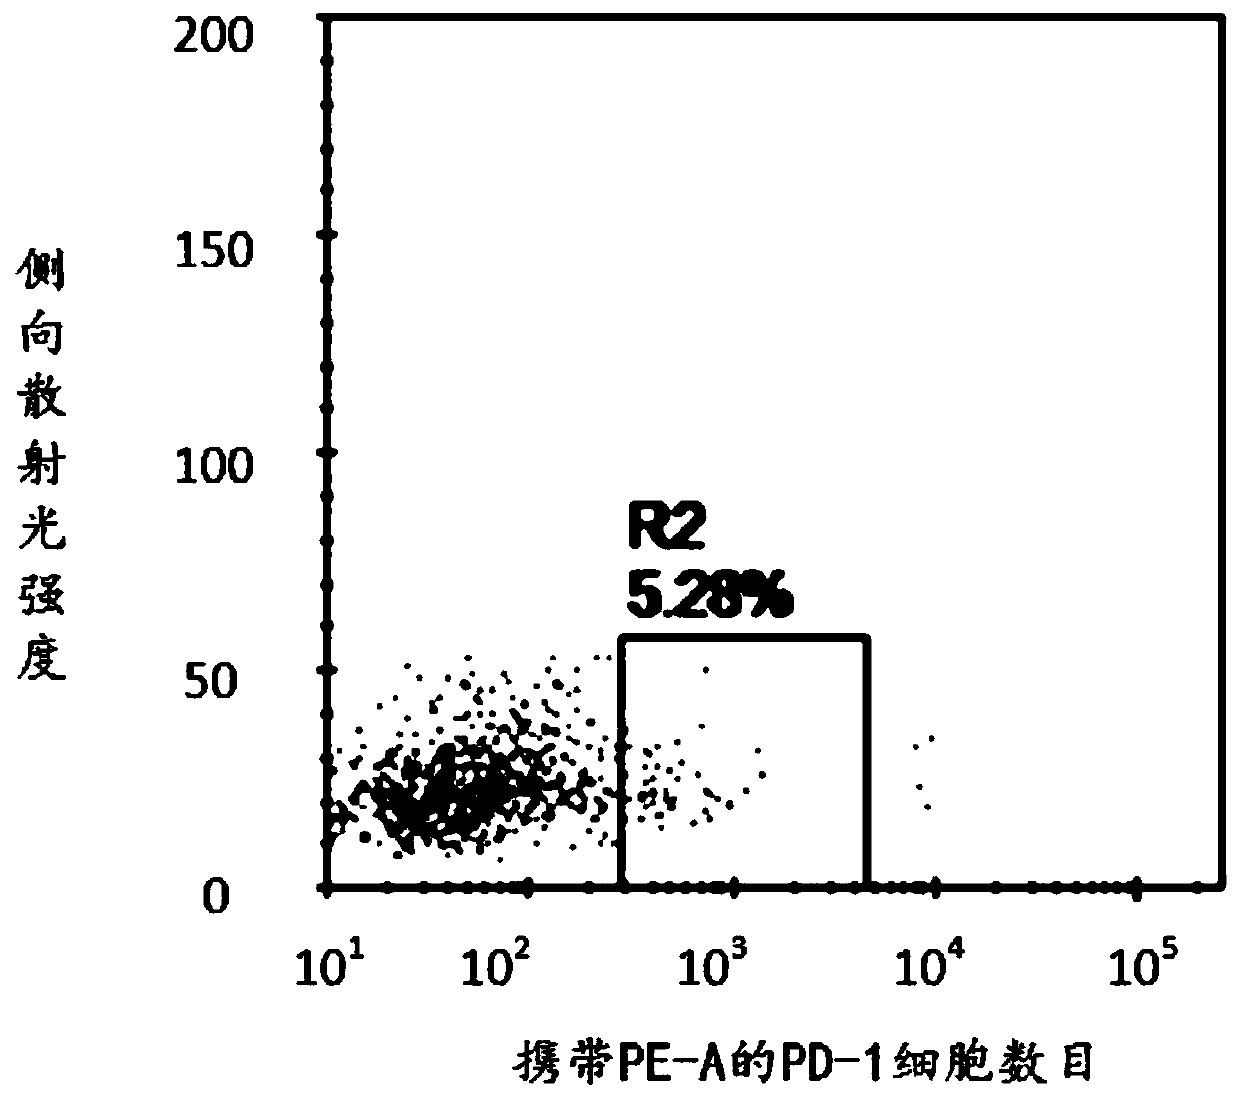 Antibody detection kit, and application thereof in immunoassay